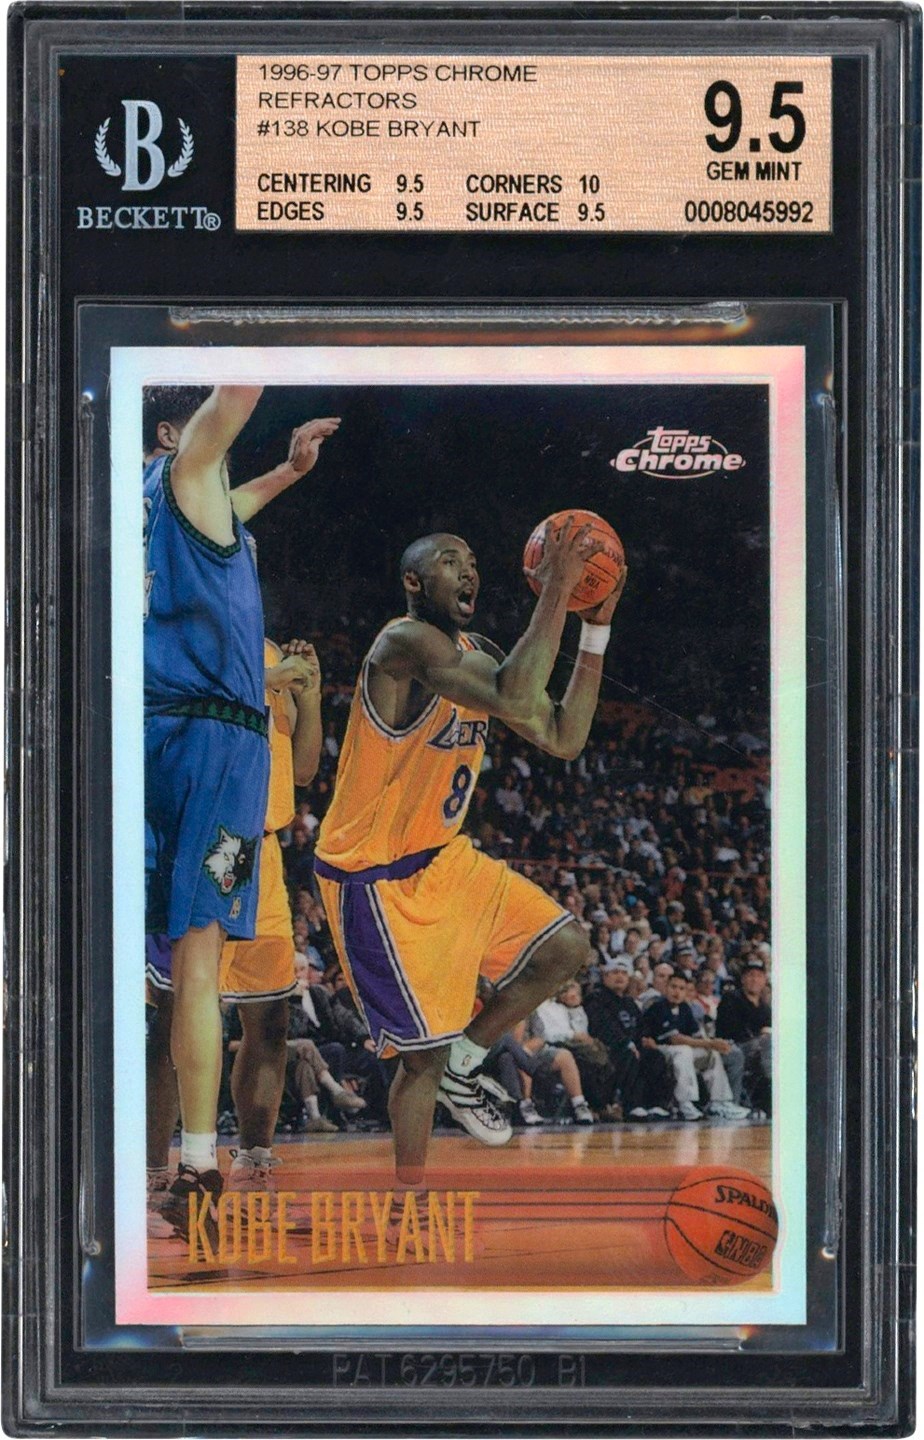 Basketball Cards - 996 Topps Chrome Refractor #138 Kobe Bryant Rookie Card BGS GEM MINT 9.5 (True Gem+)